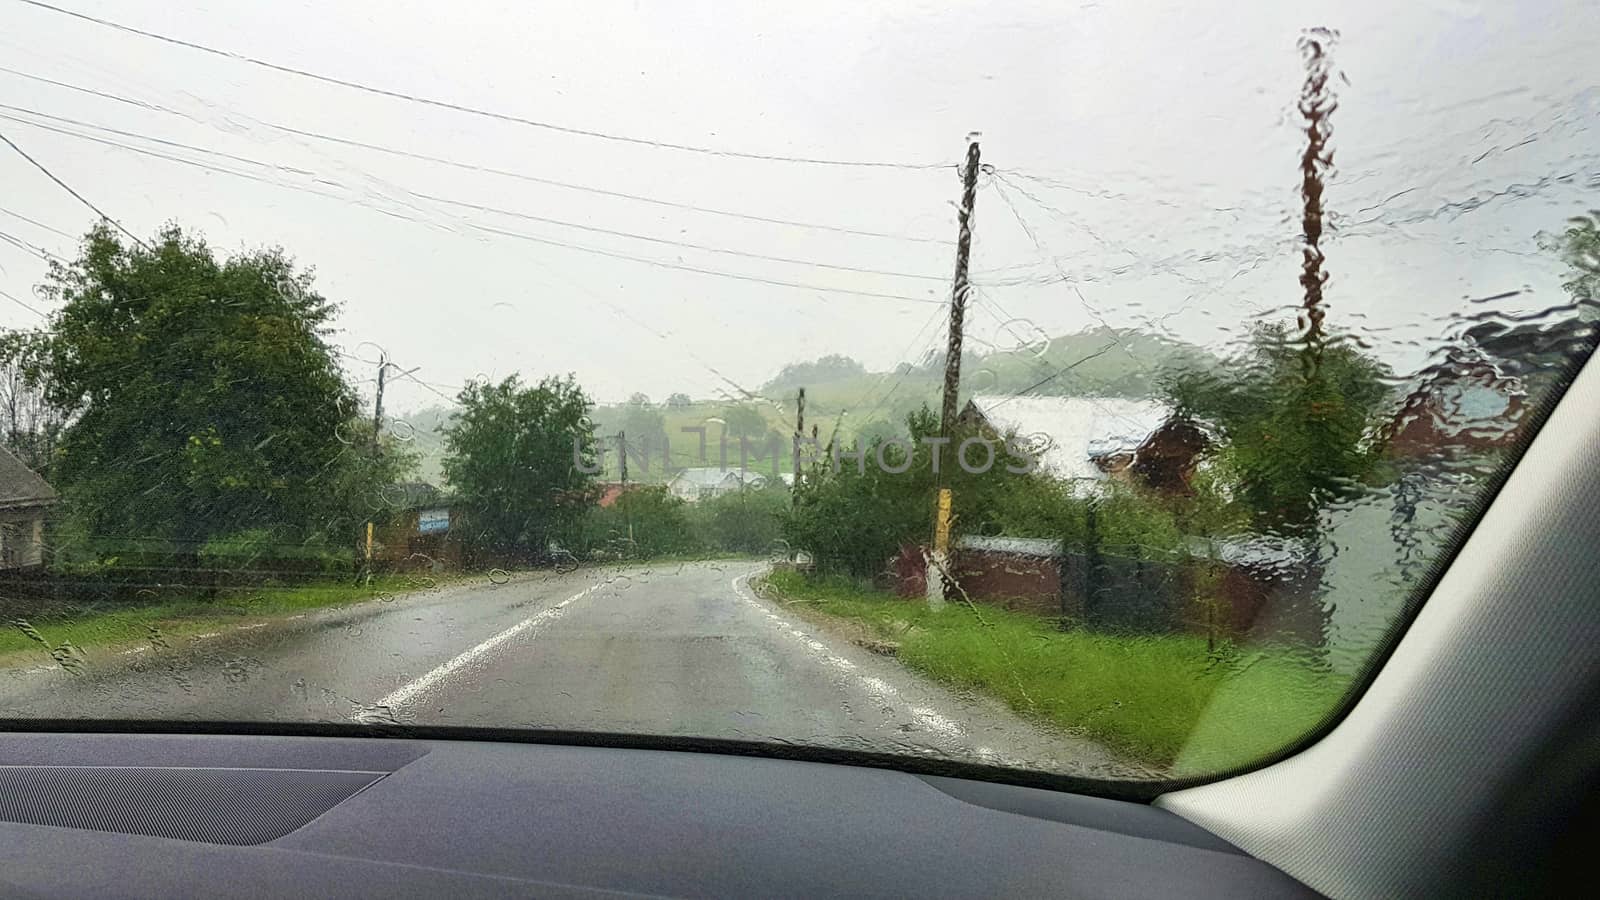 Road view through car windshield on heavy rain.